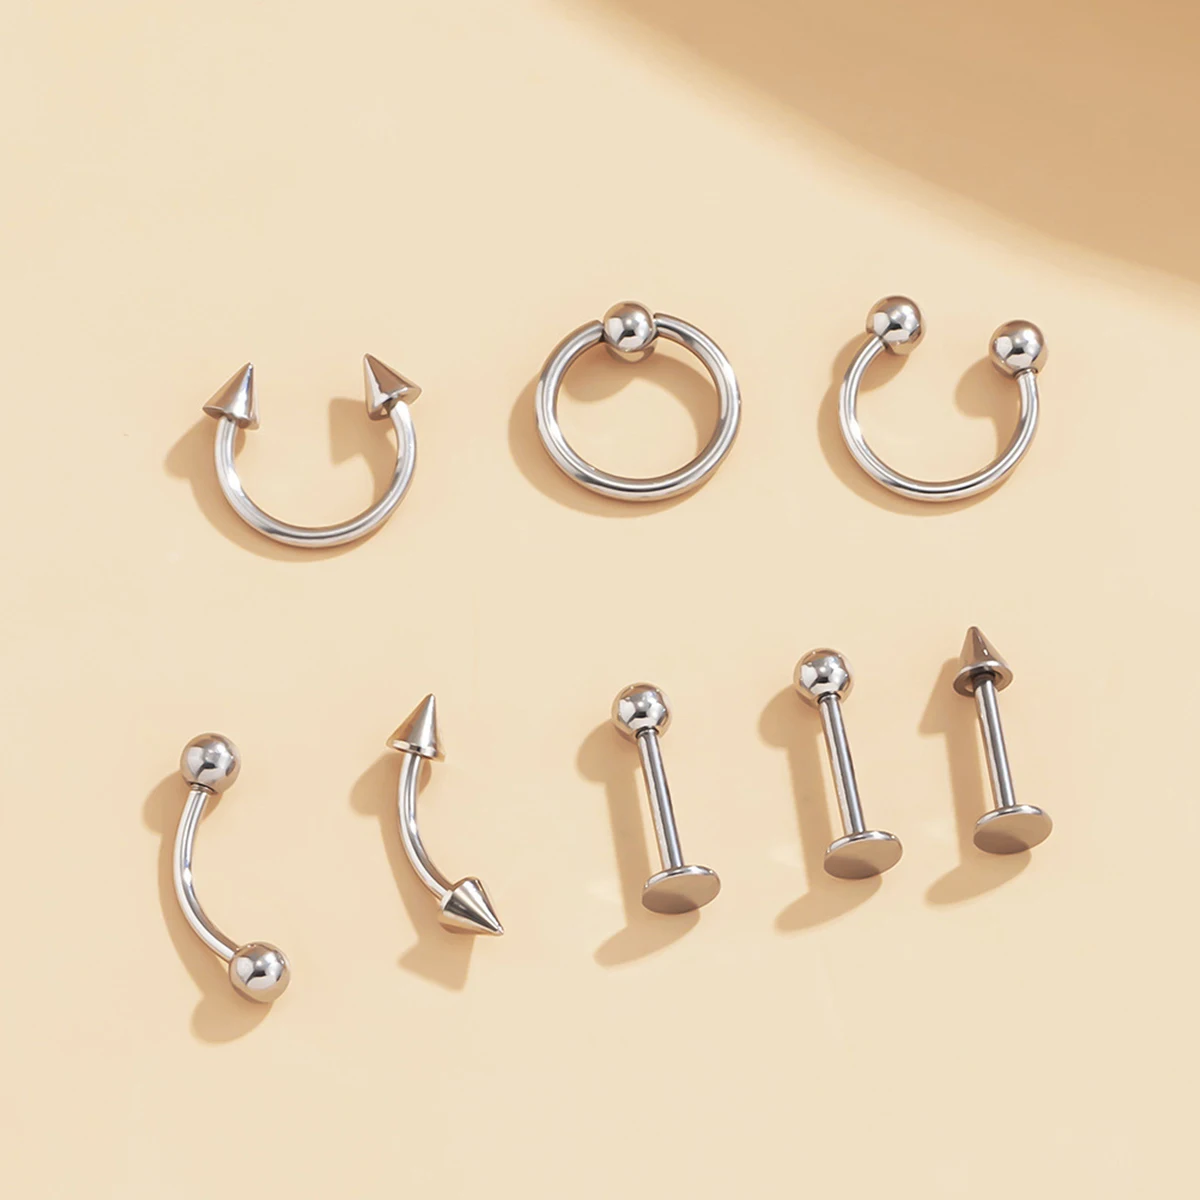 85Pcs Surgical Steel Body-Piercing Jewellery